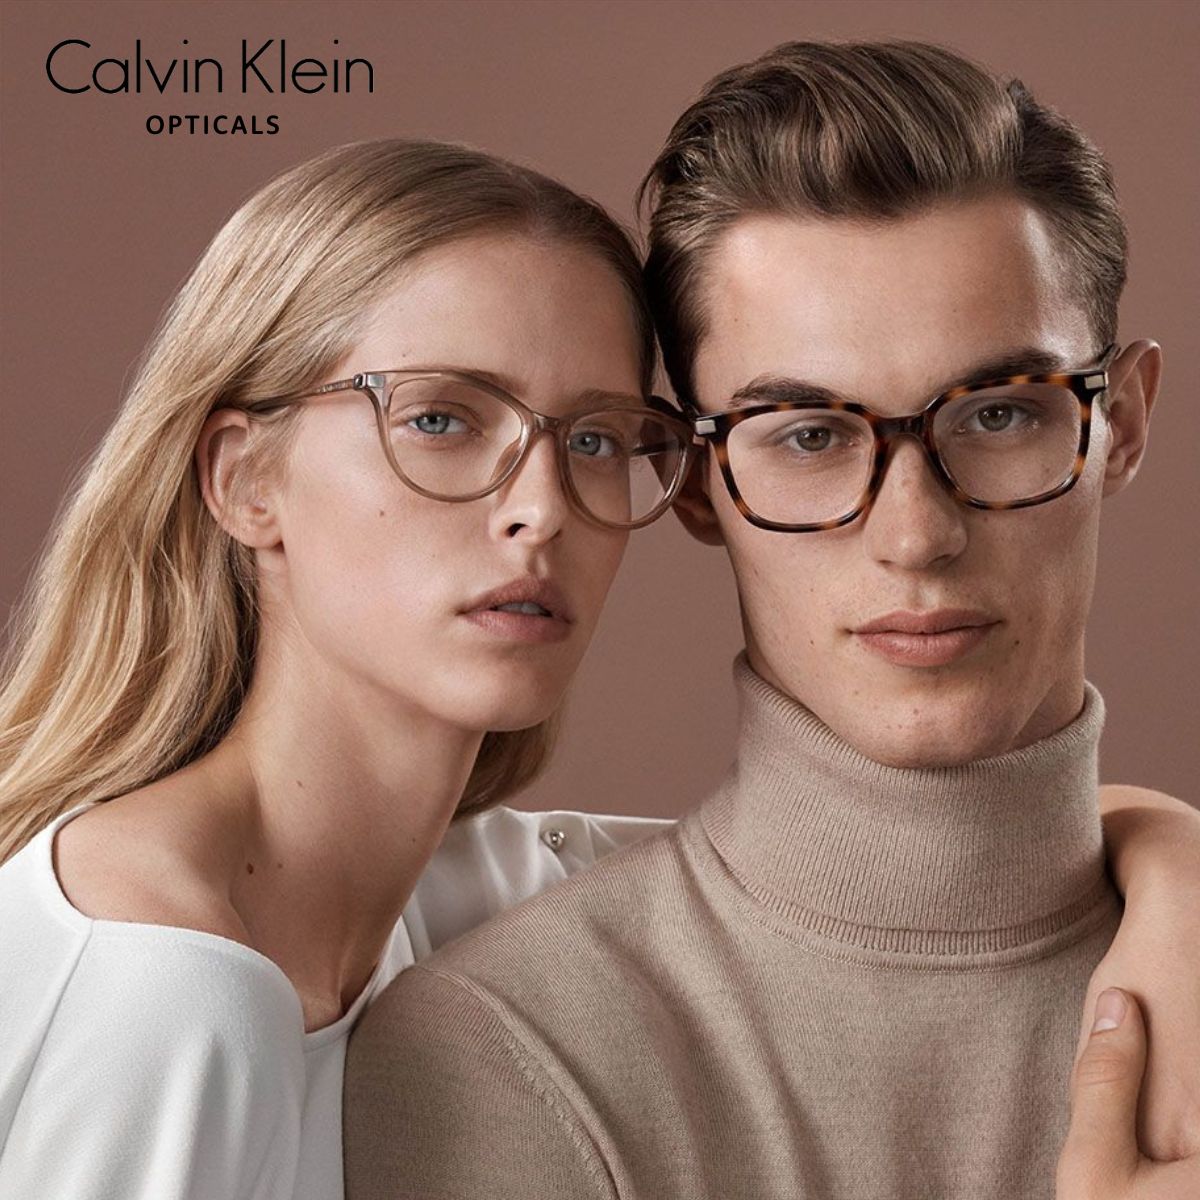 "Calvin Klein eyeglasses collection at Optorium."